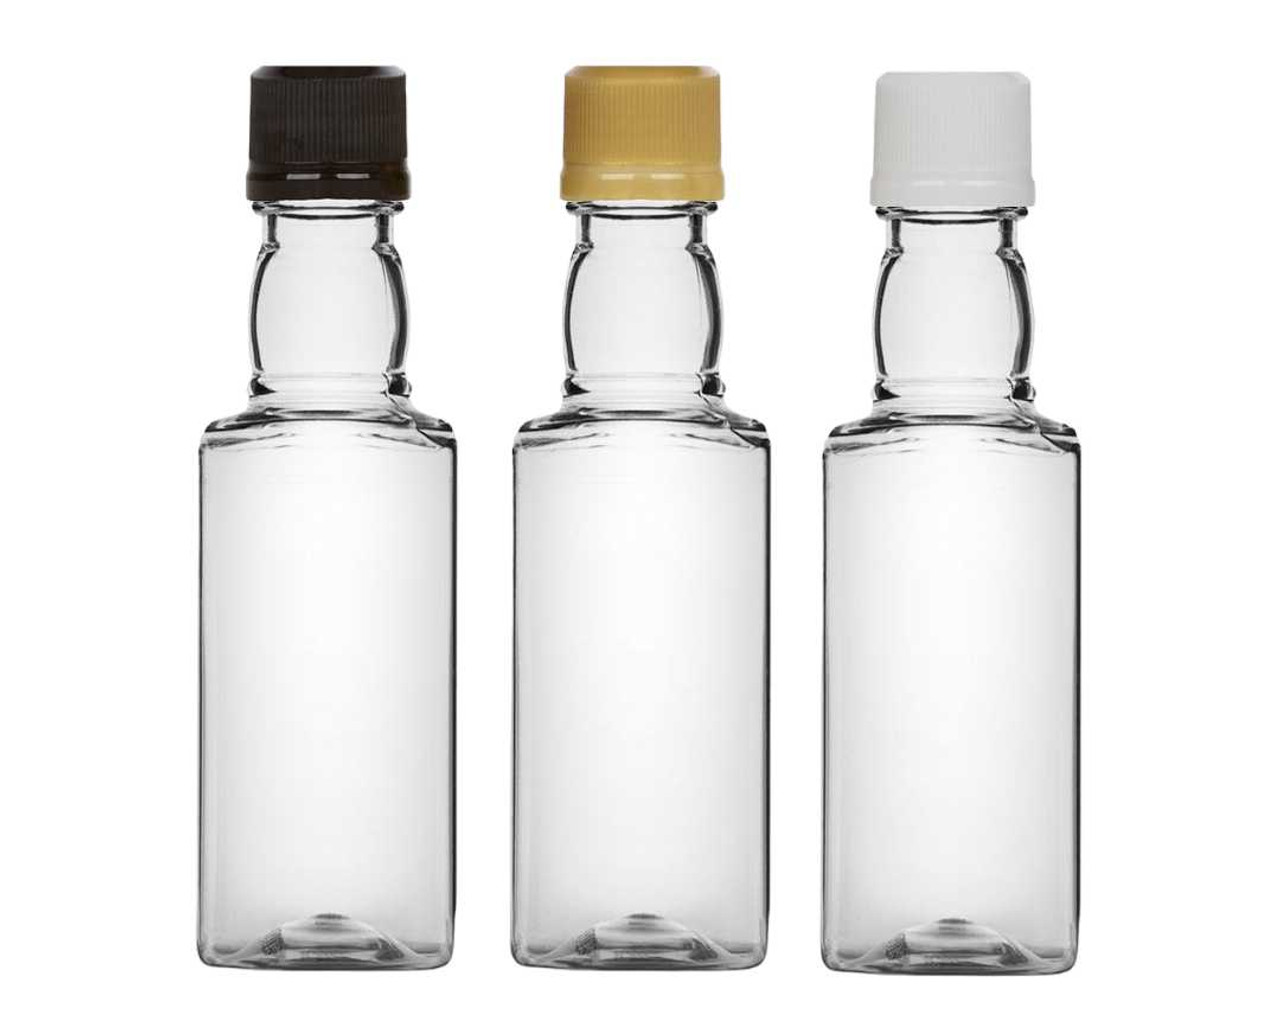 https://cdn11.bigcommerce.com/s-1ybtx/images/stencil/1280x1280/products/1690/7851/17-oz-50-ml-mini-Square-Plastic-Liquor-Bottle-with-choice-of-color-cap_7084__94930.1699989583.jpg?c=2?imbypass=on